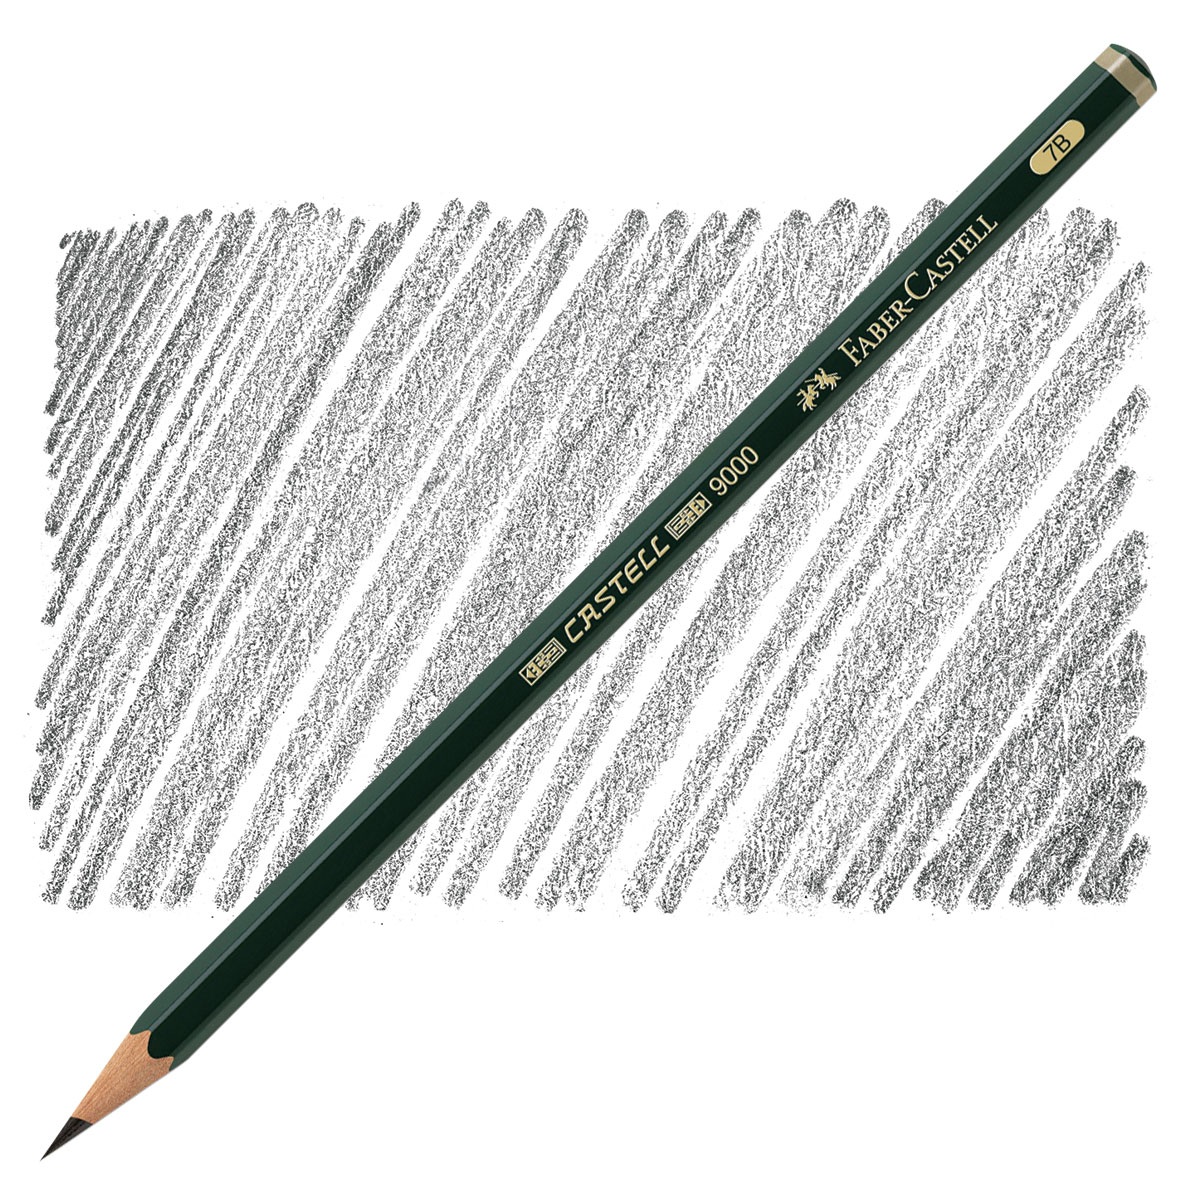 Faber Castell 9000 Graphite Sketch Pencils 5B 5H Design Set Of 12 - Office  Depot